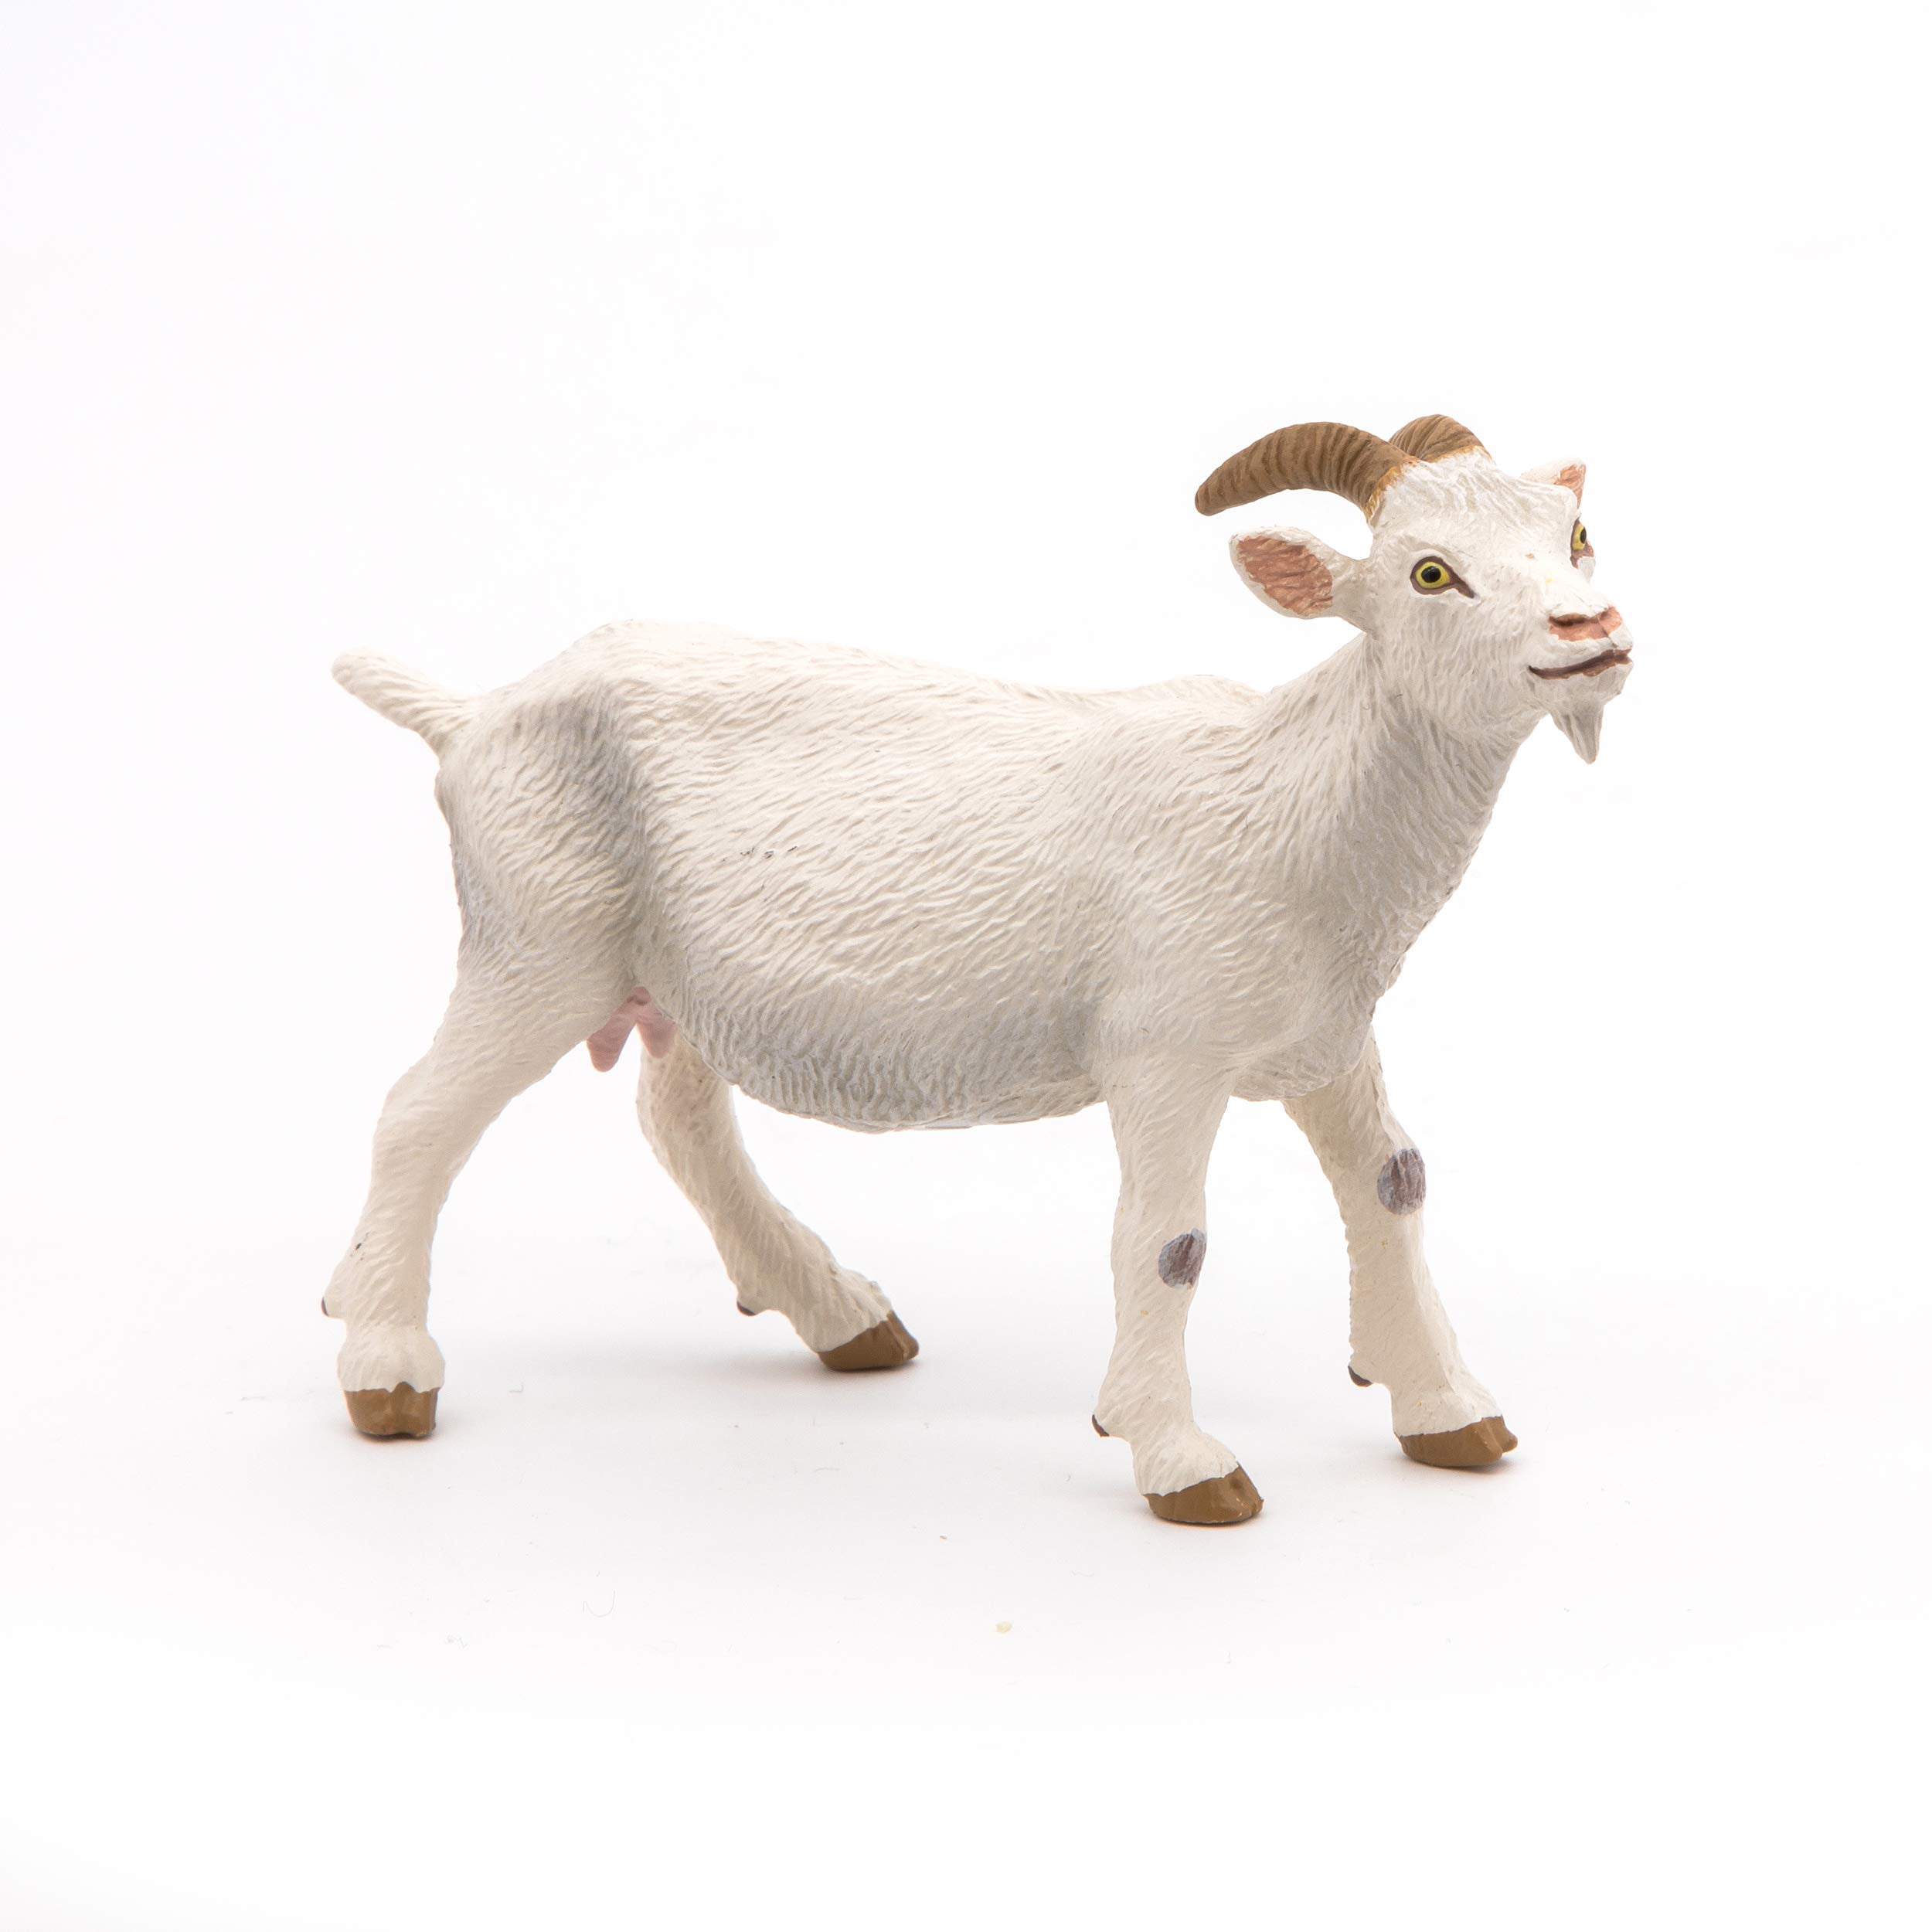 NEU Papo Farm Animals ZIEGE GOAT Toy Figure Retired NWT 51029